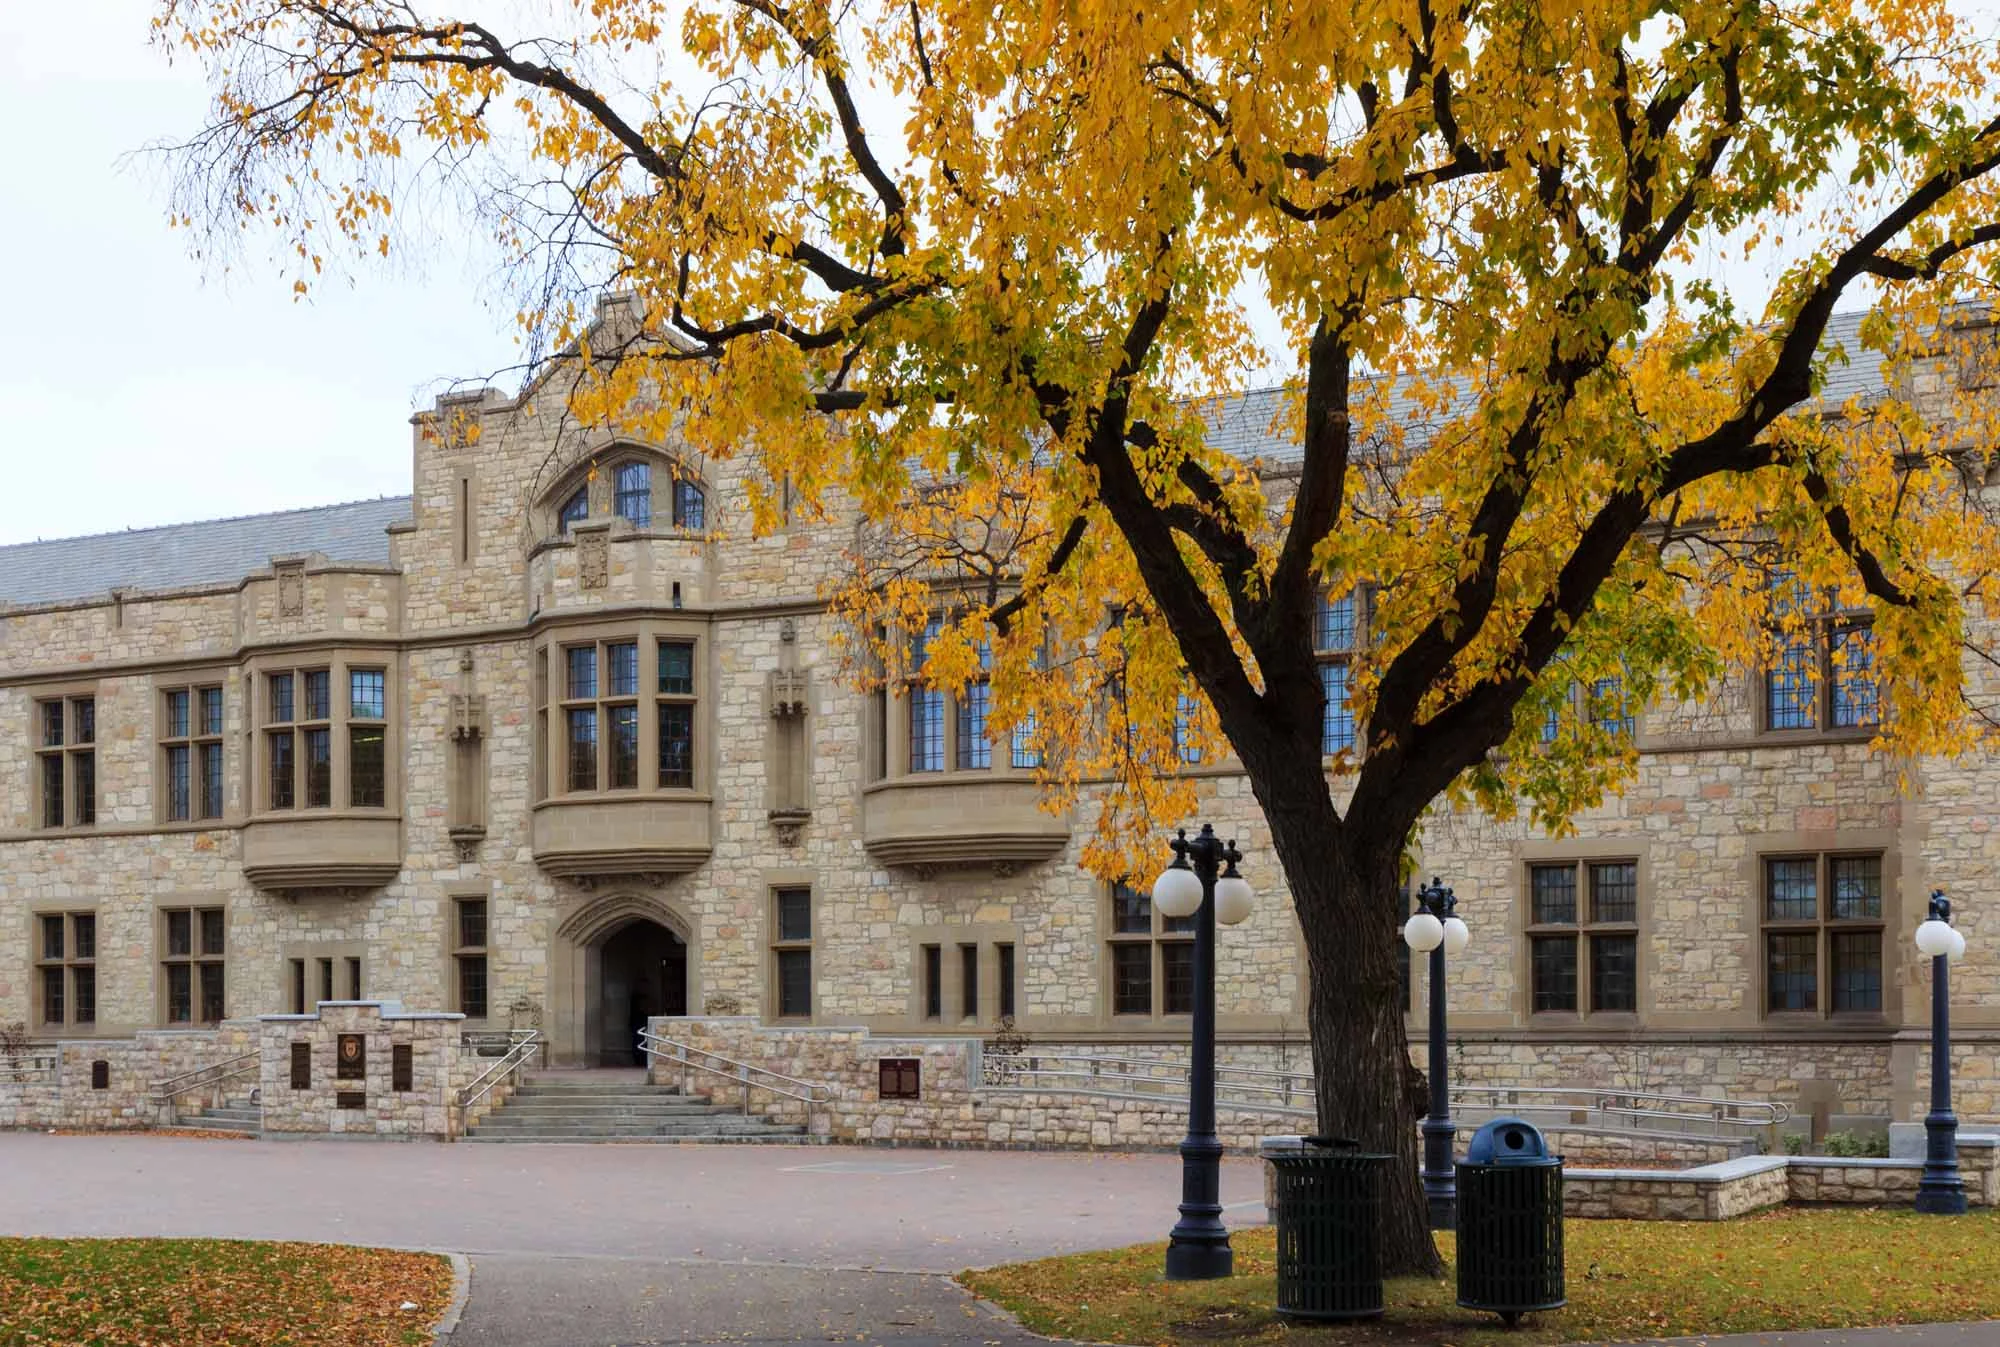 University of Saskatchewan Graduate Scholarship